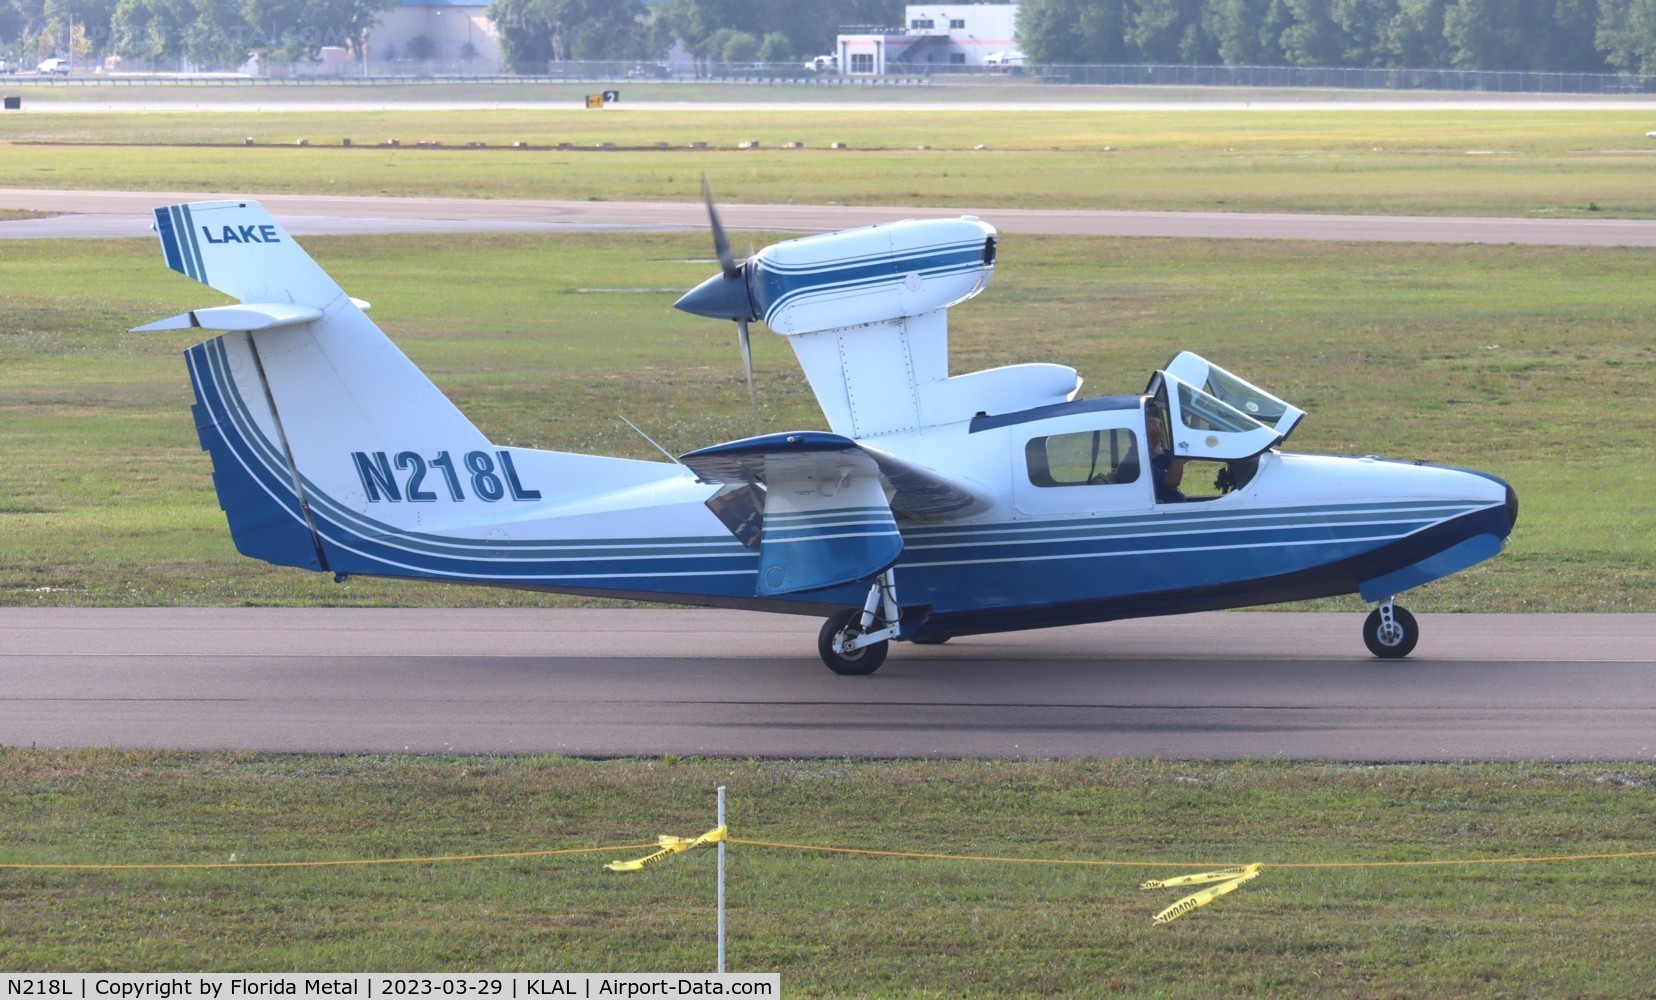 N218L, Aerofab Inc Lake LA-250 C/N 68, LA-250 zx